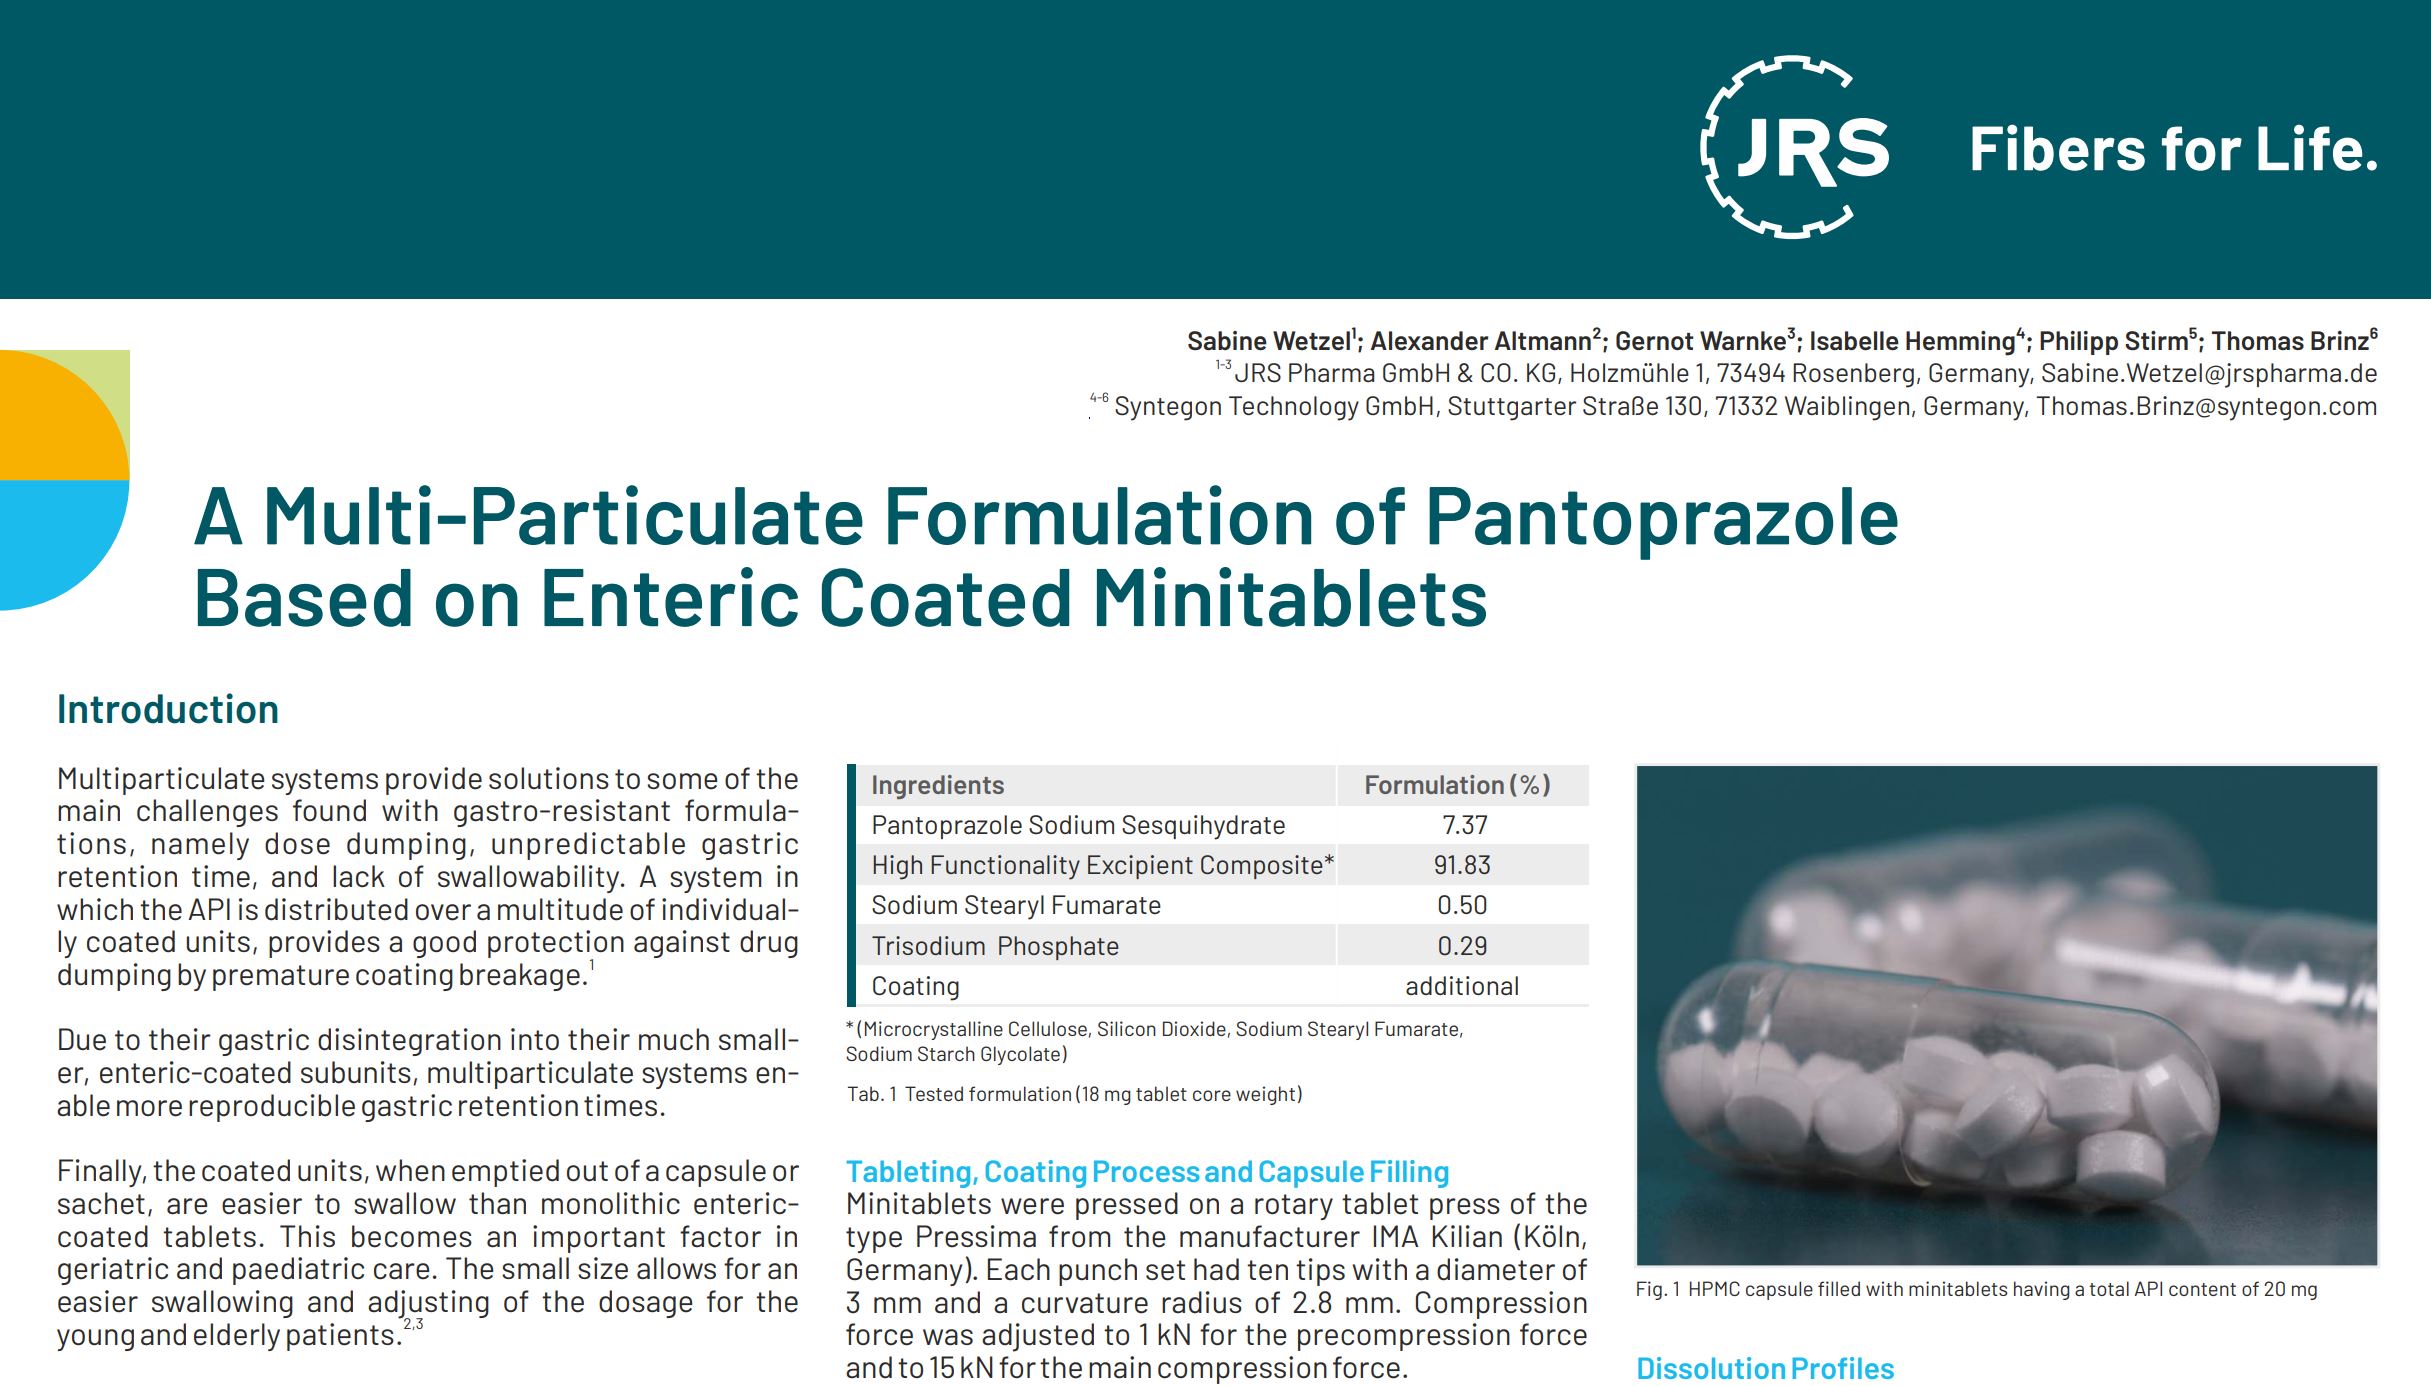 A Multi-Particulate Formulation of Pantoprazole Based on Enteric Coated Minitablets